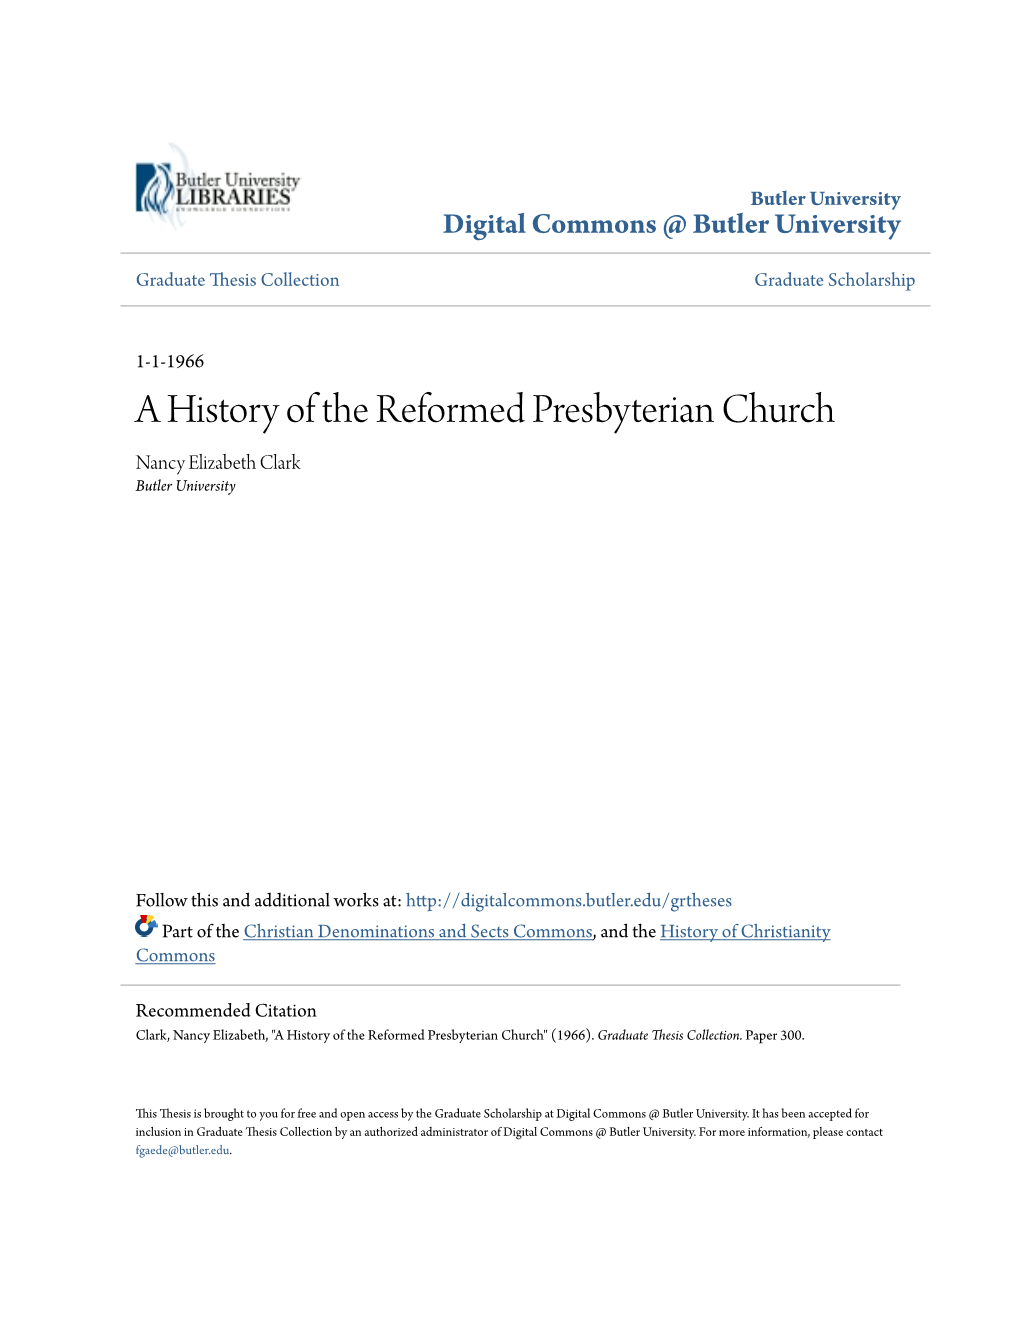 A History of the Reformed Presbyterian Church Nancy Elizabeth Clark Butler University